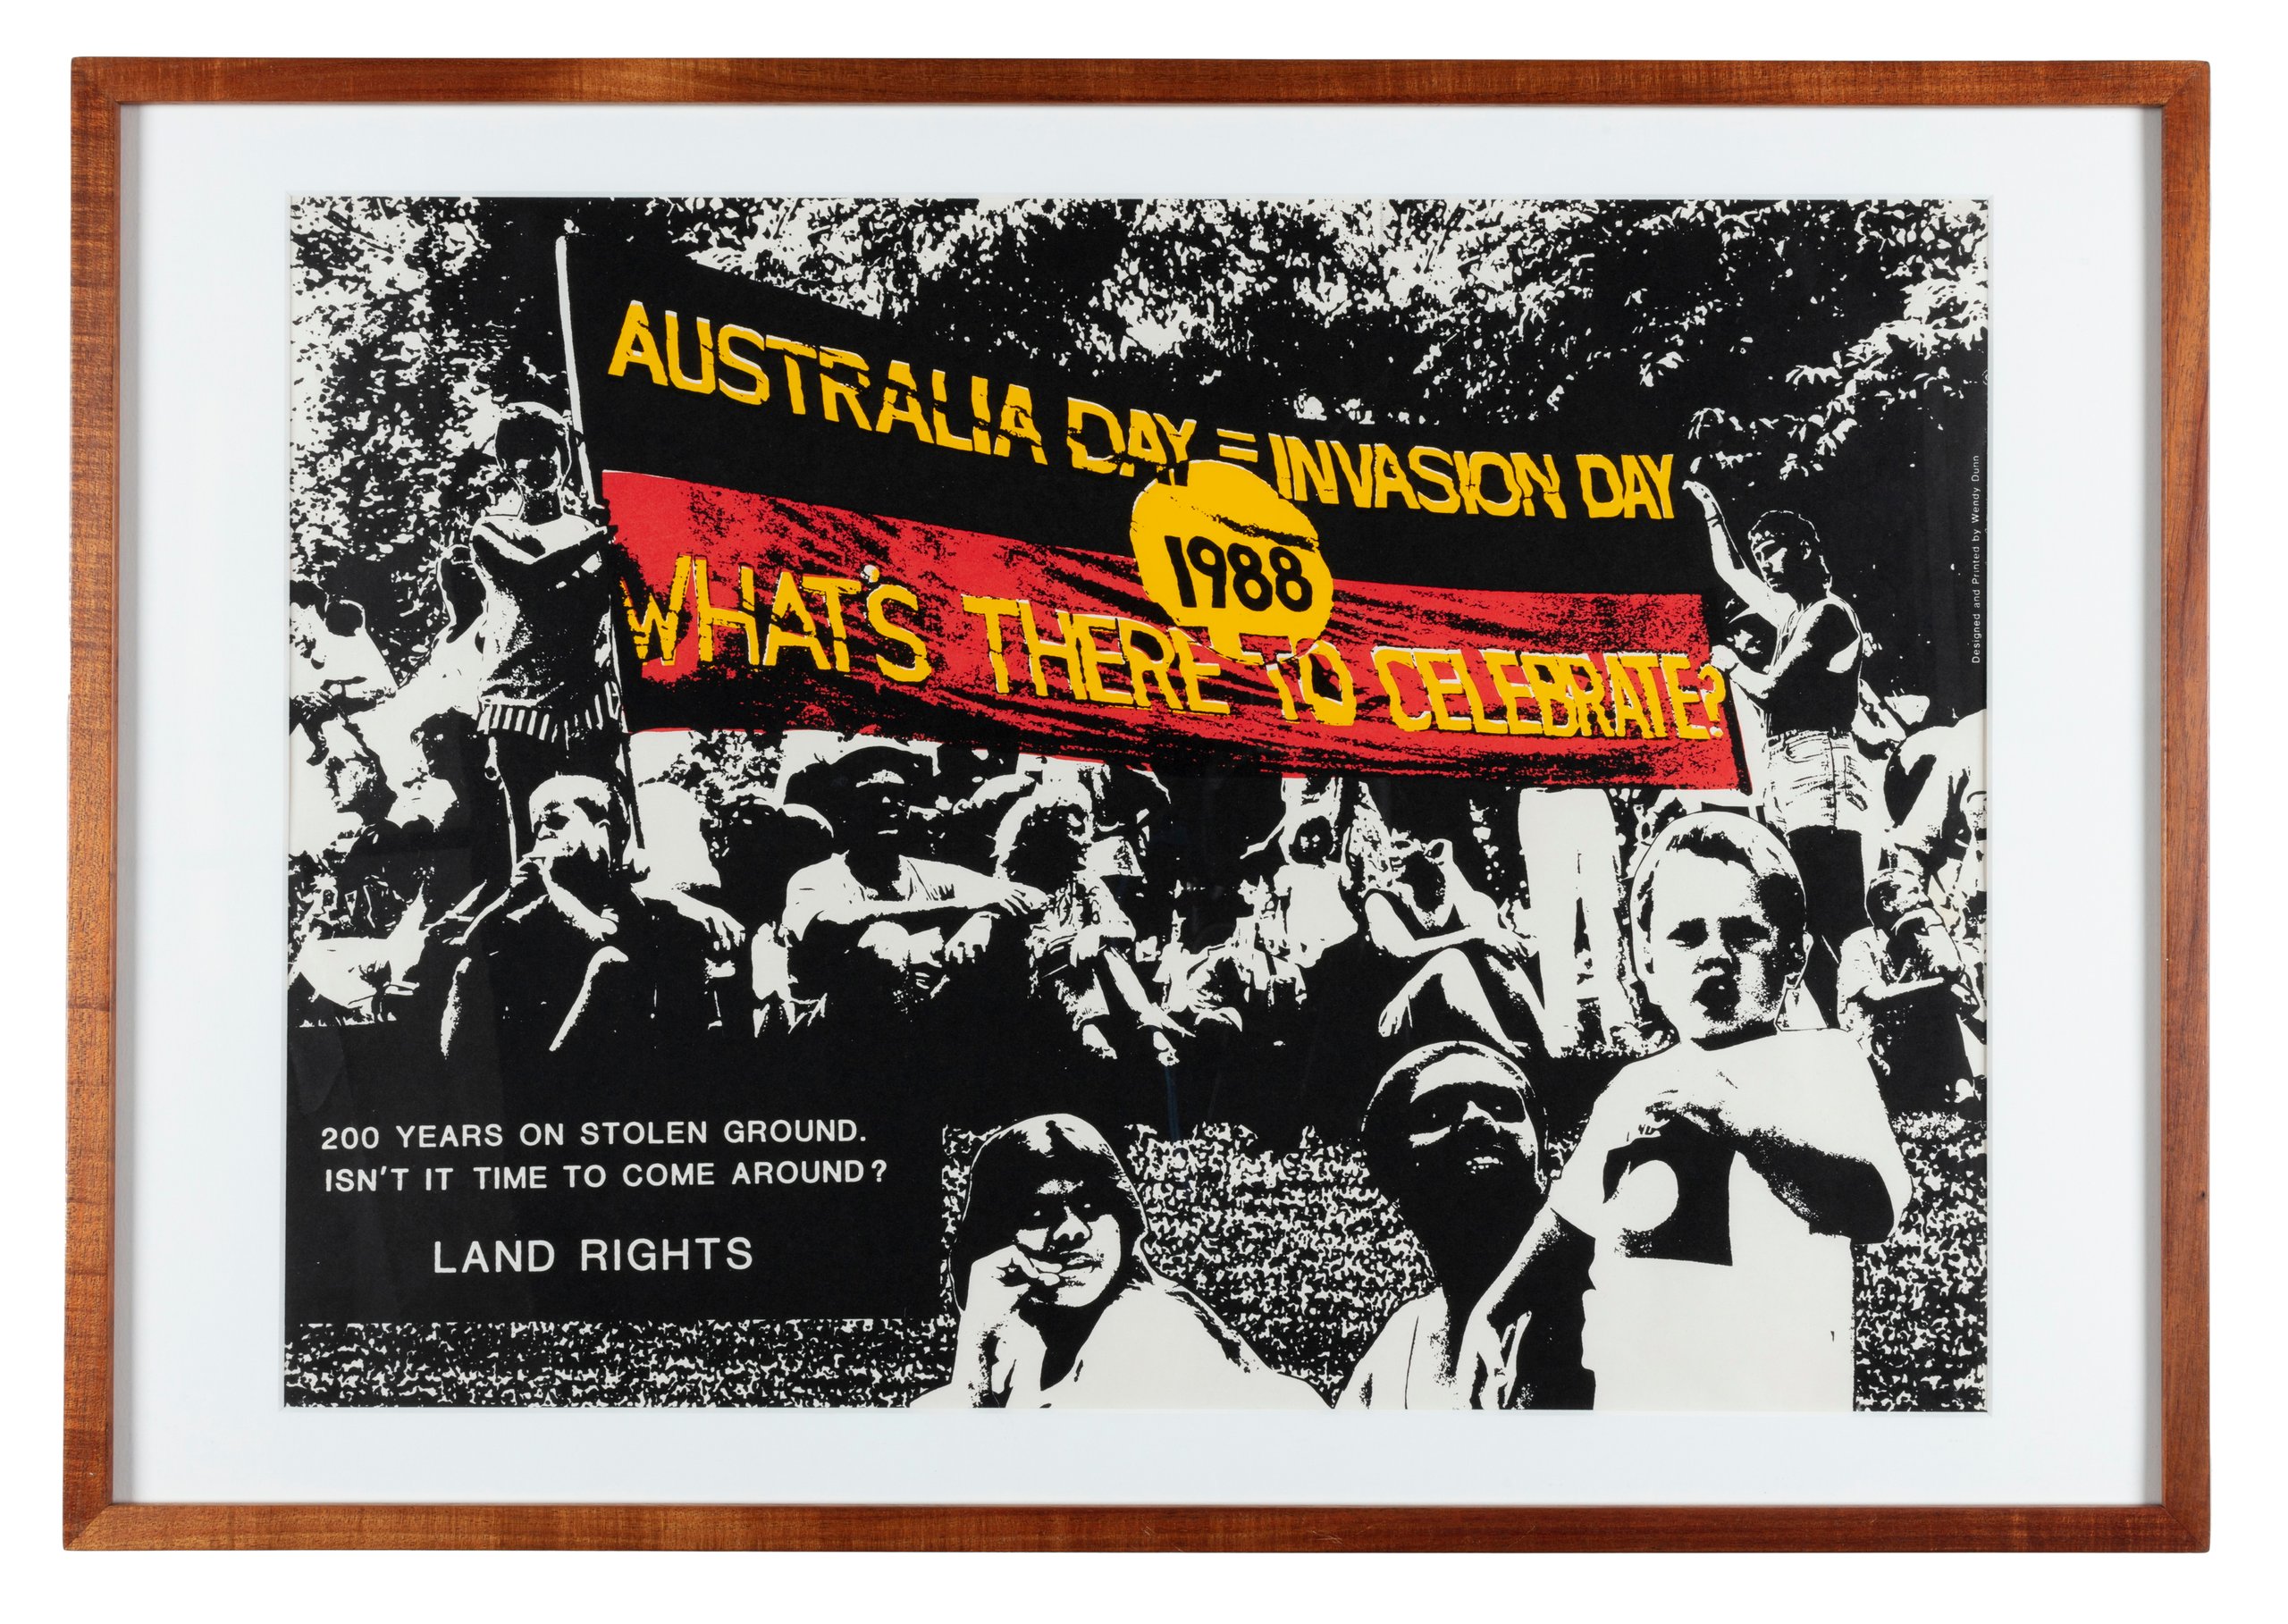 'Australia Day Invasion Day' by Wendy Dunn